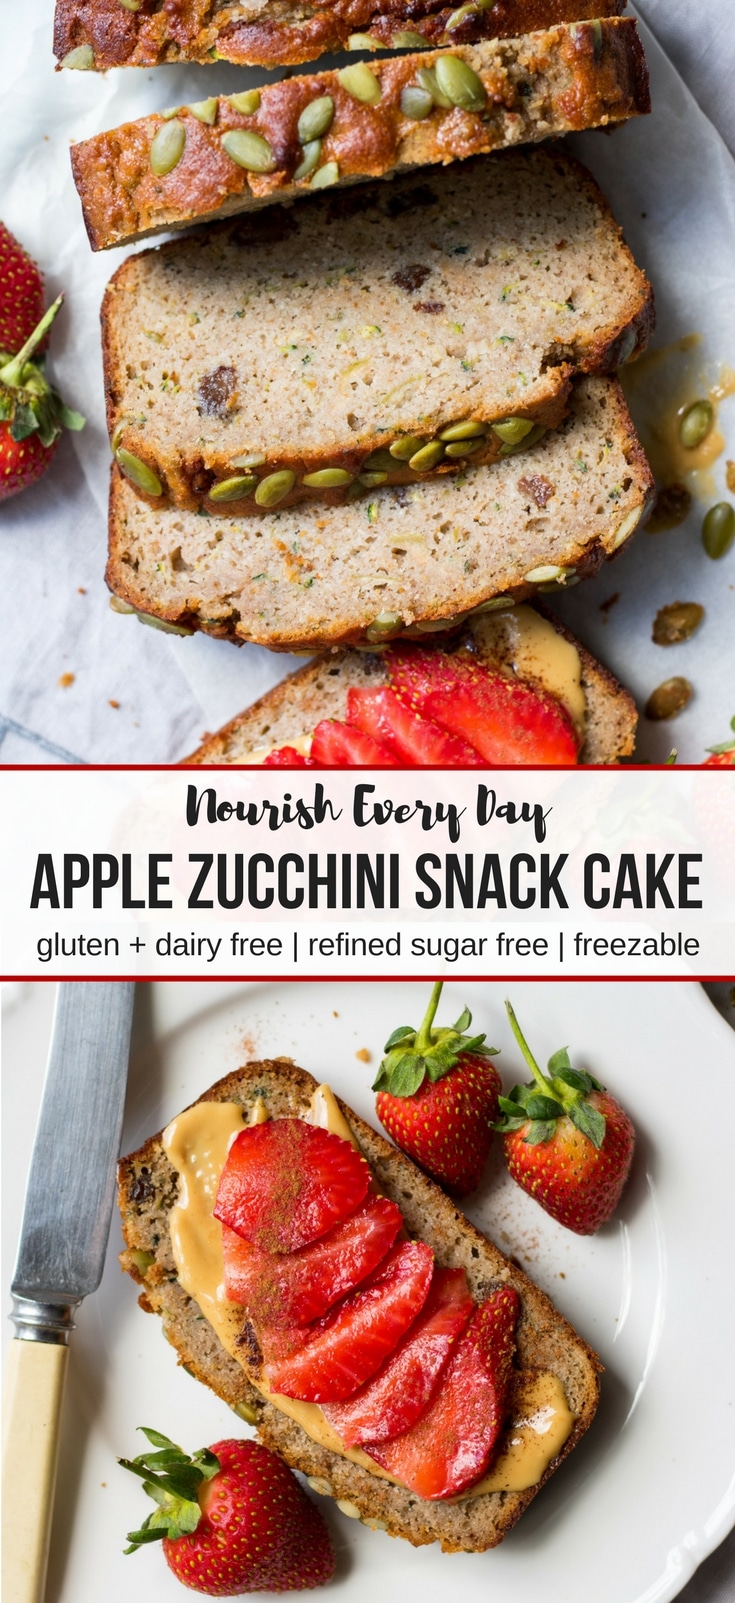 Apple zucchini snack cake recipe by Nourish Every Day Pinterest Graphic